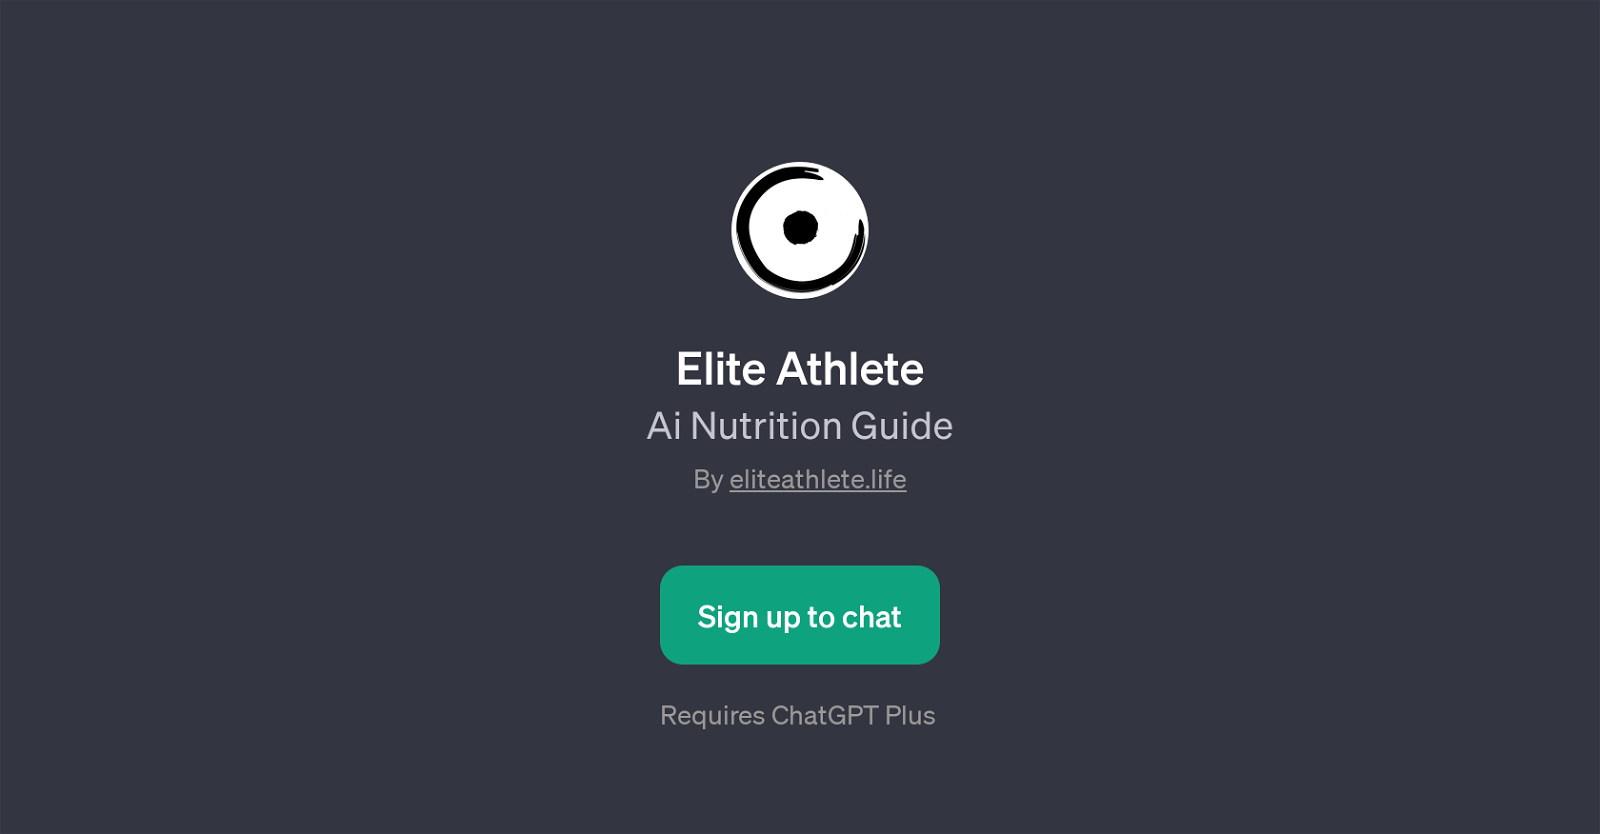 Elite Athlete website